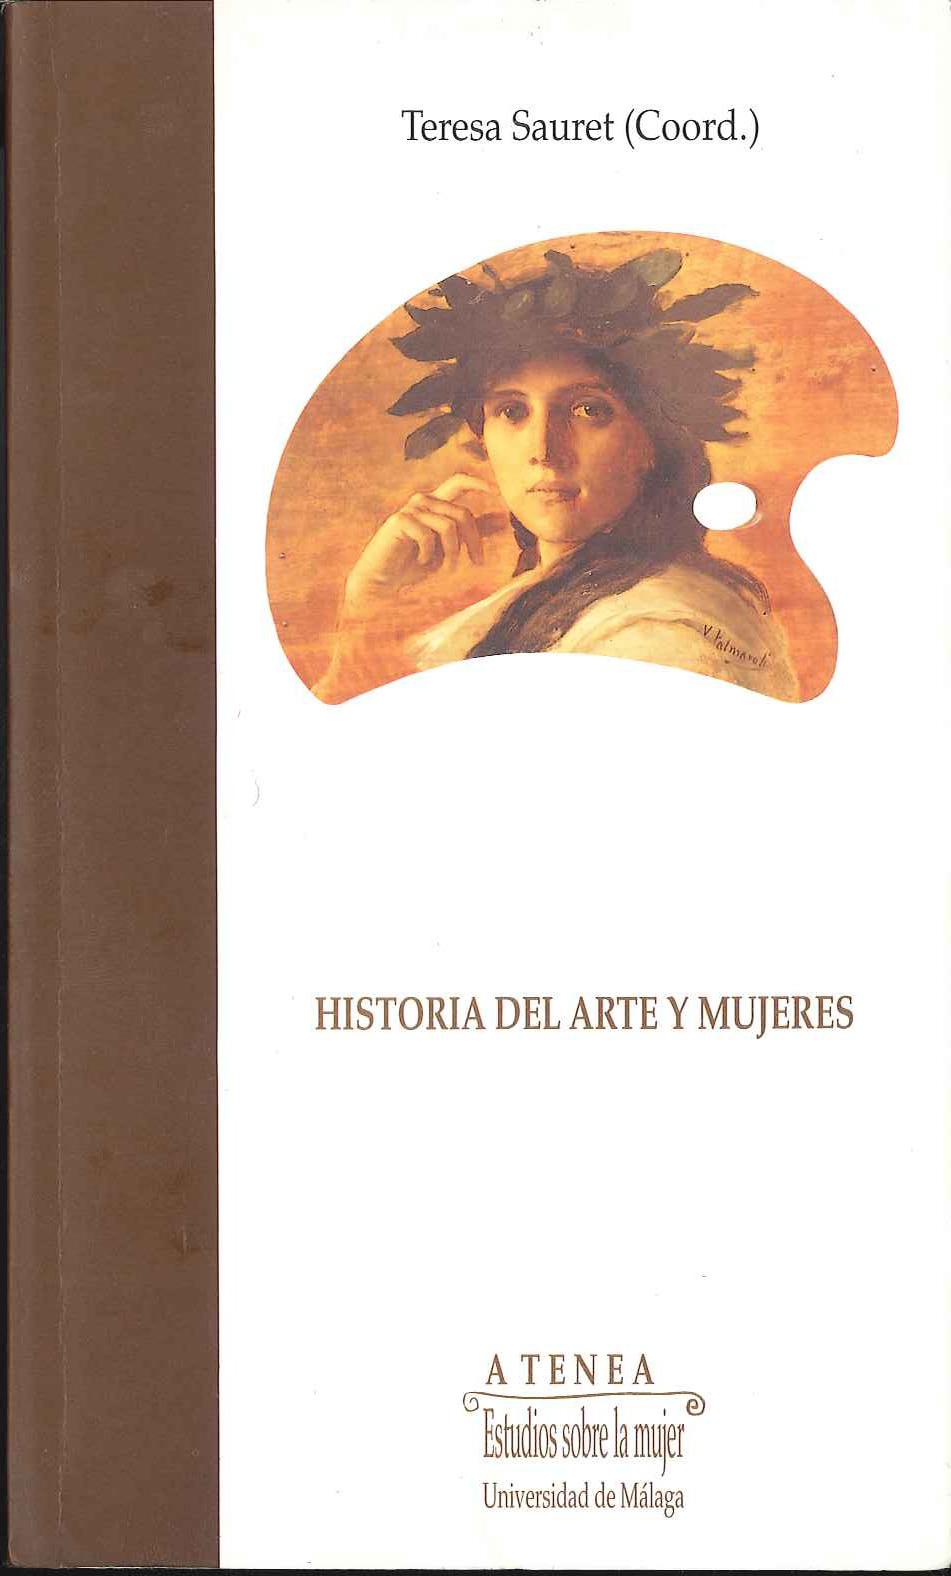 Teresa Sauret historia del arte y mujeres